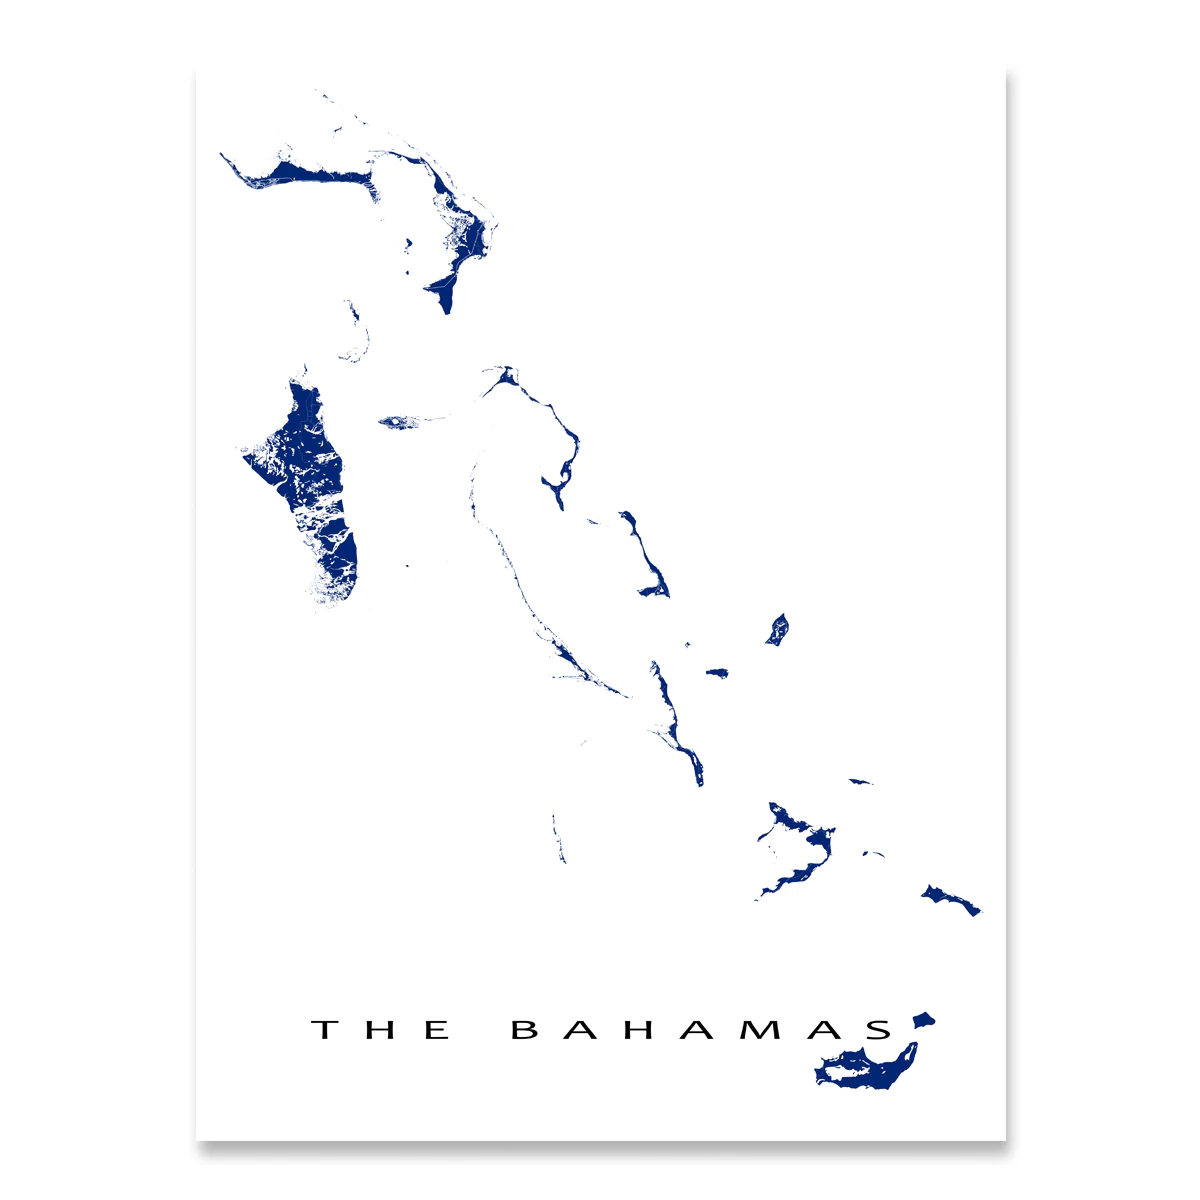 Islands of The Bahamas Image